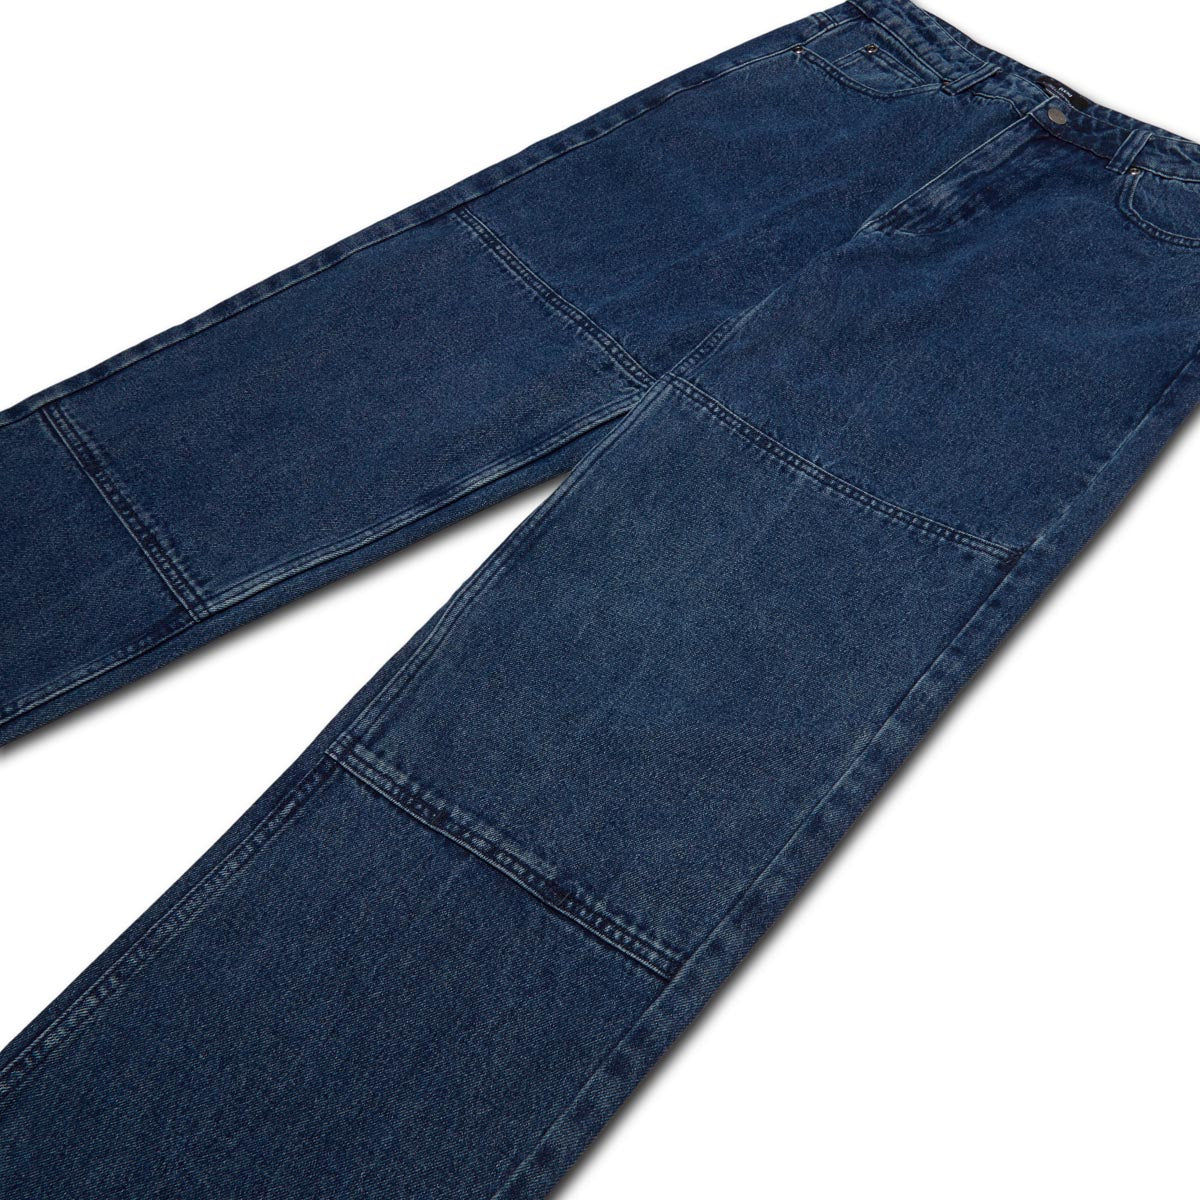 CCS Double Knee Original Relaxed Denim Jeans - True Blue image 7